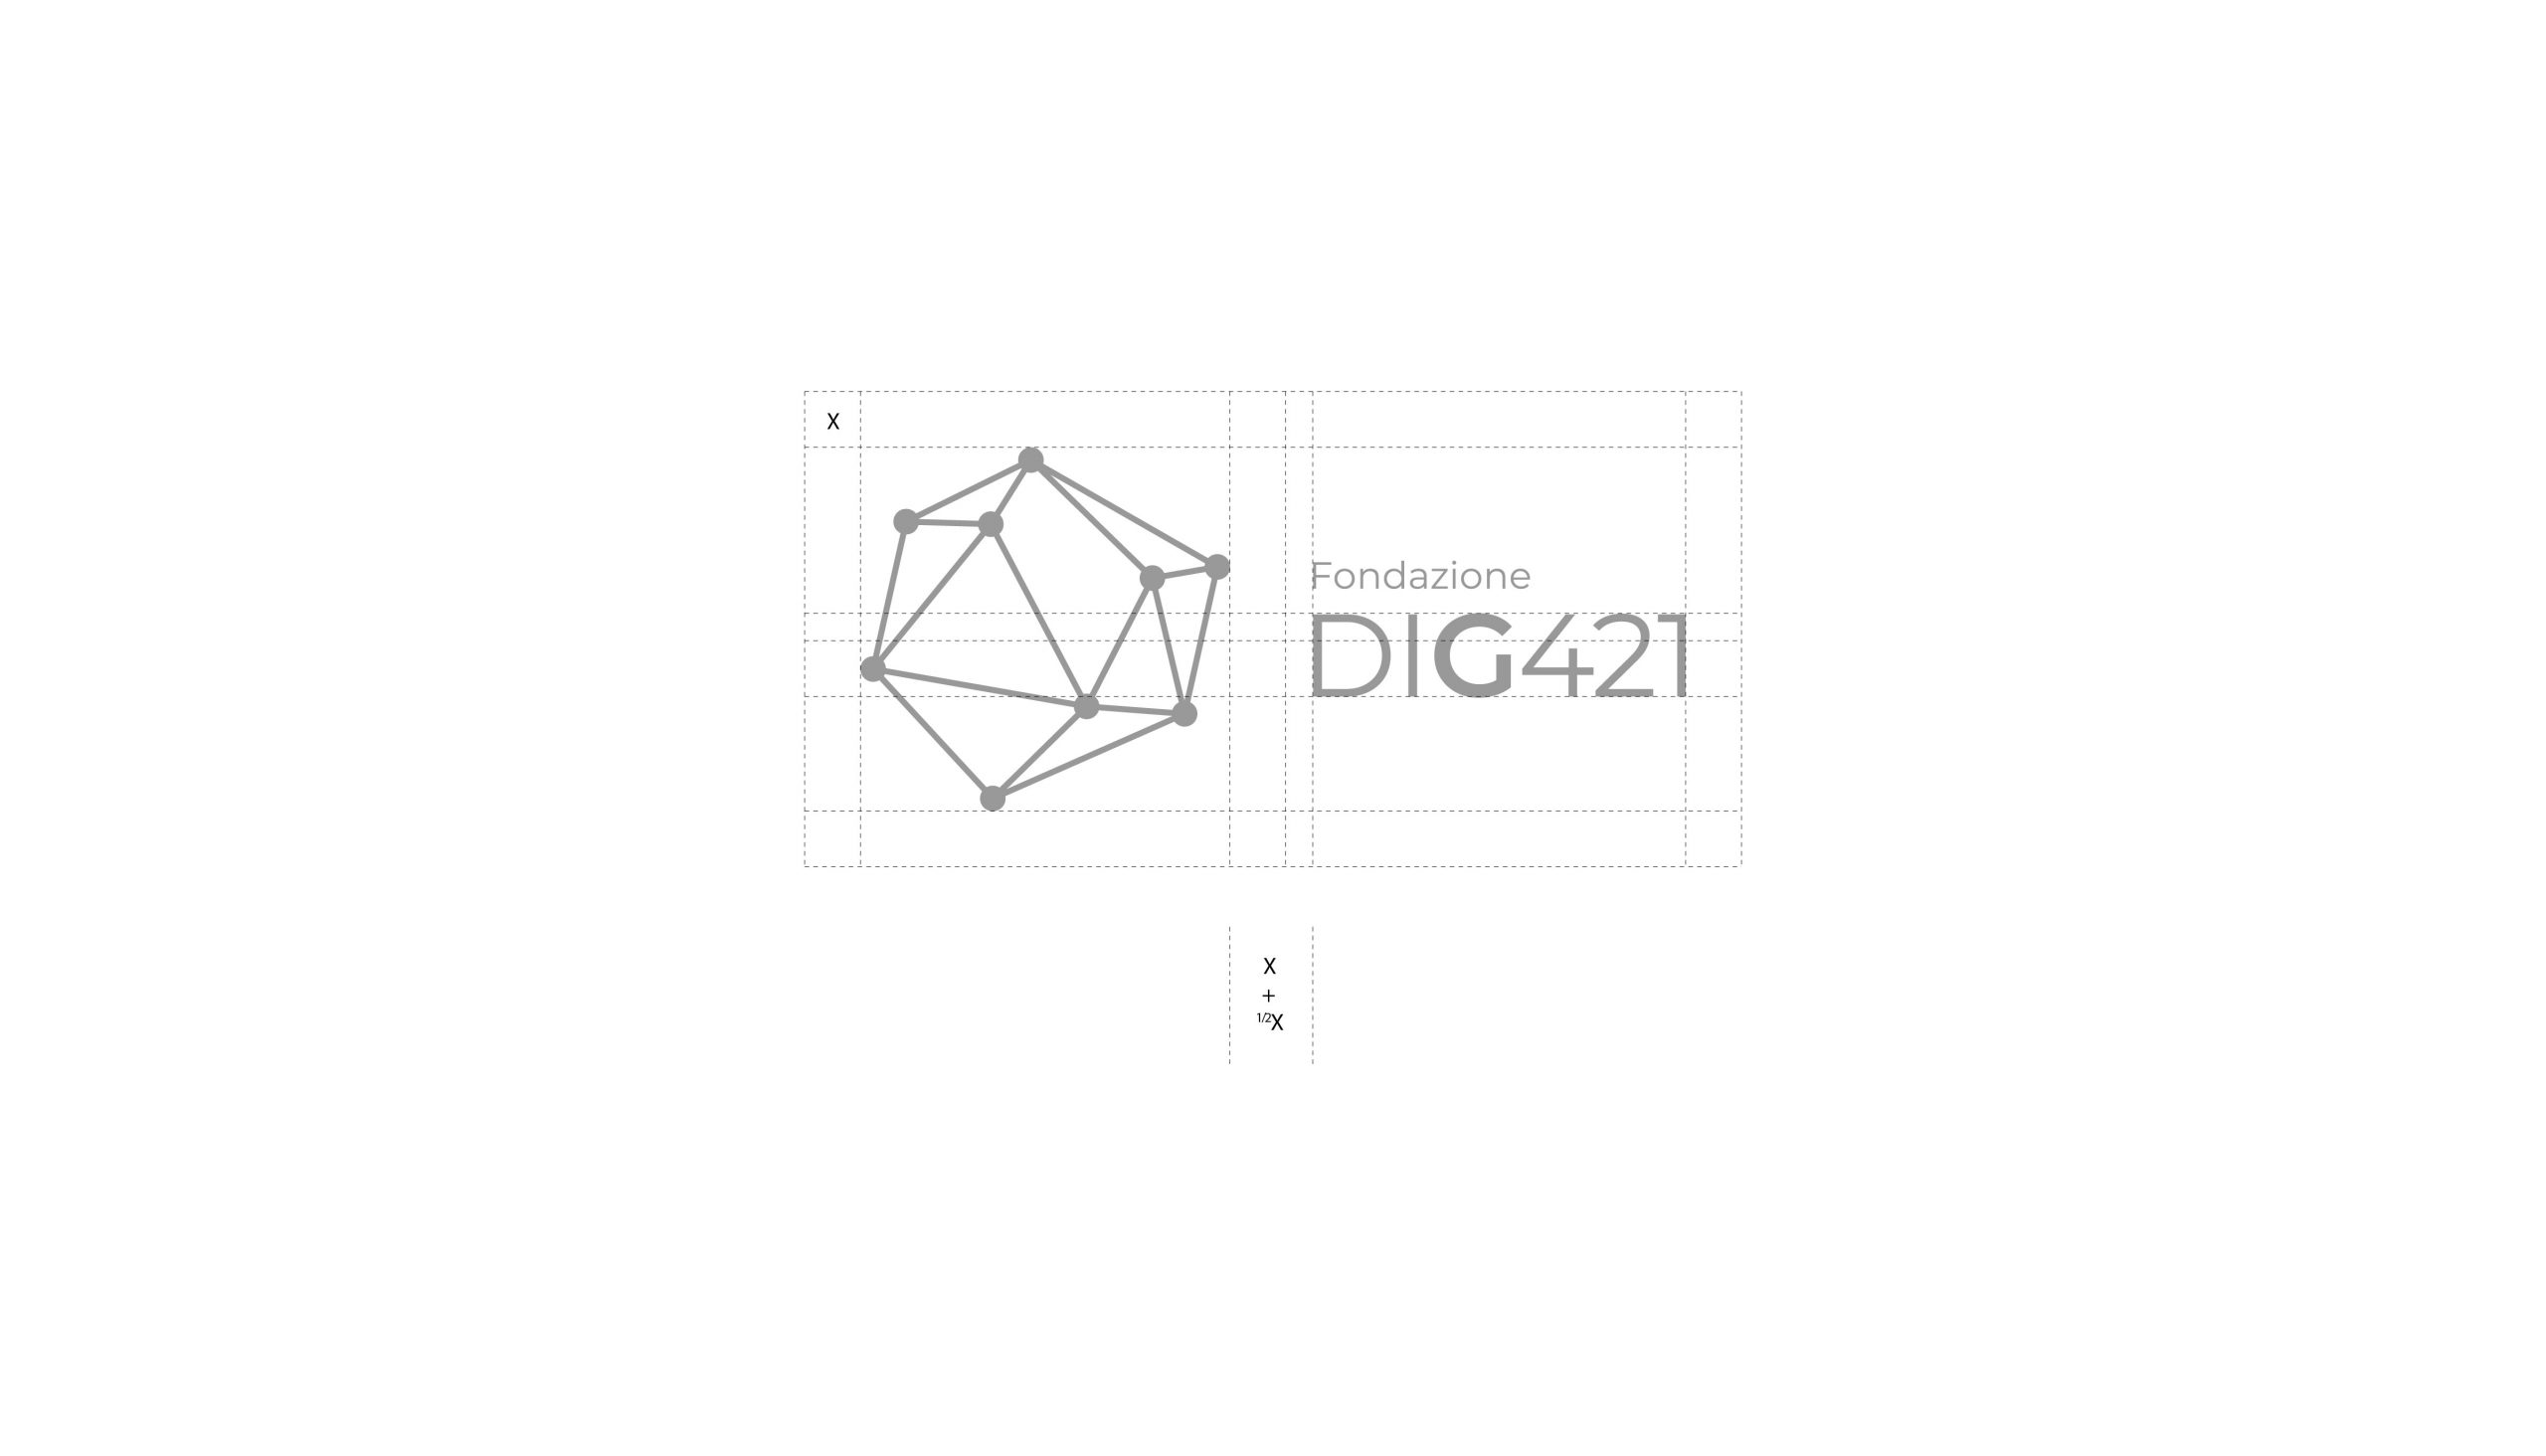 DIG421 Digital Innovation Gate Logo